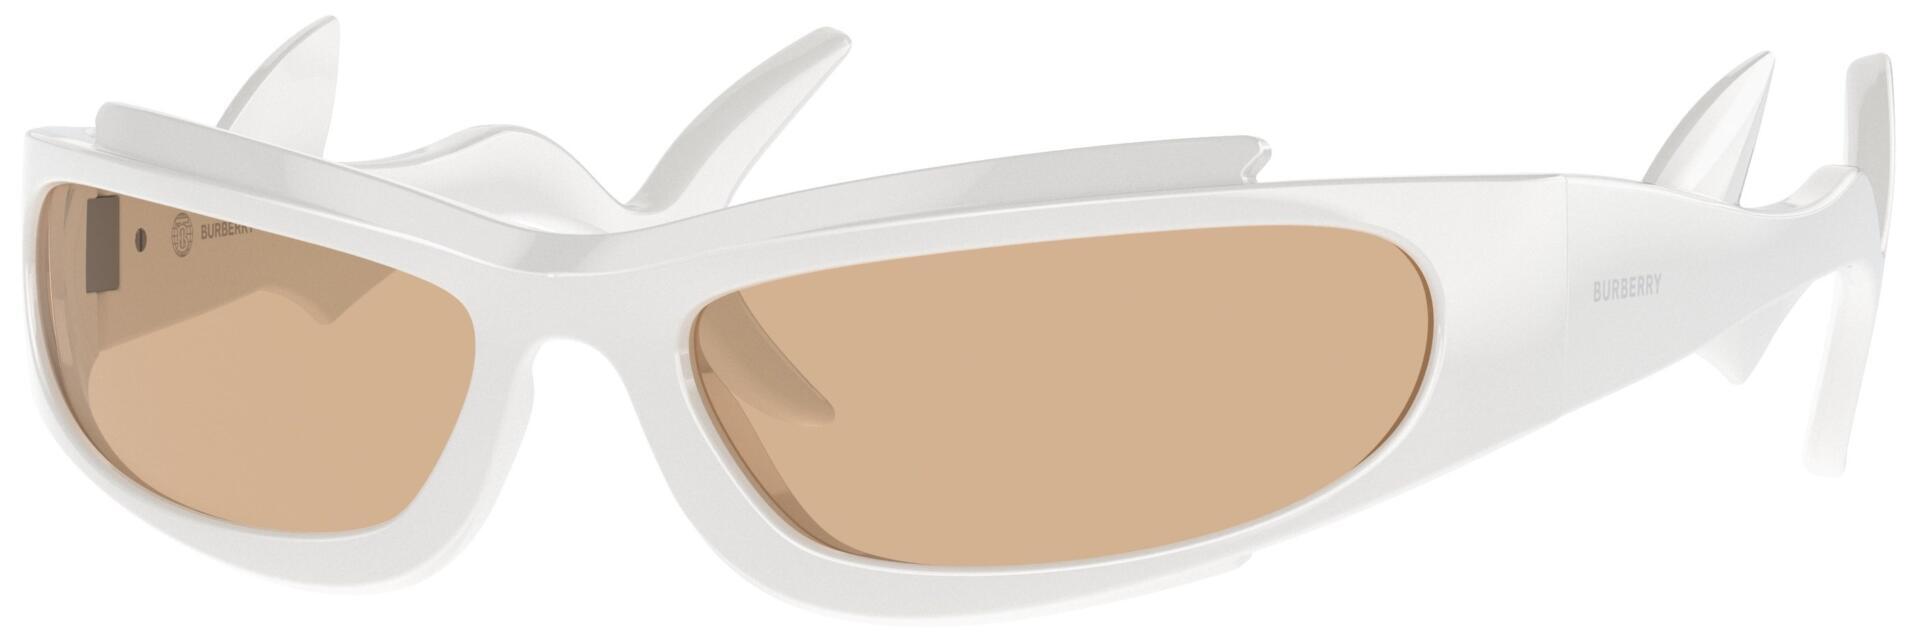 Sunglasses (BE4399 White) | style